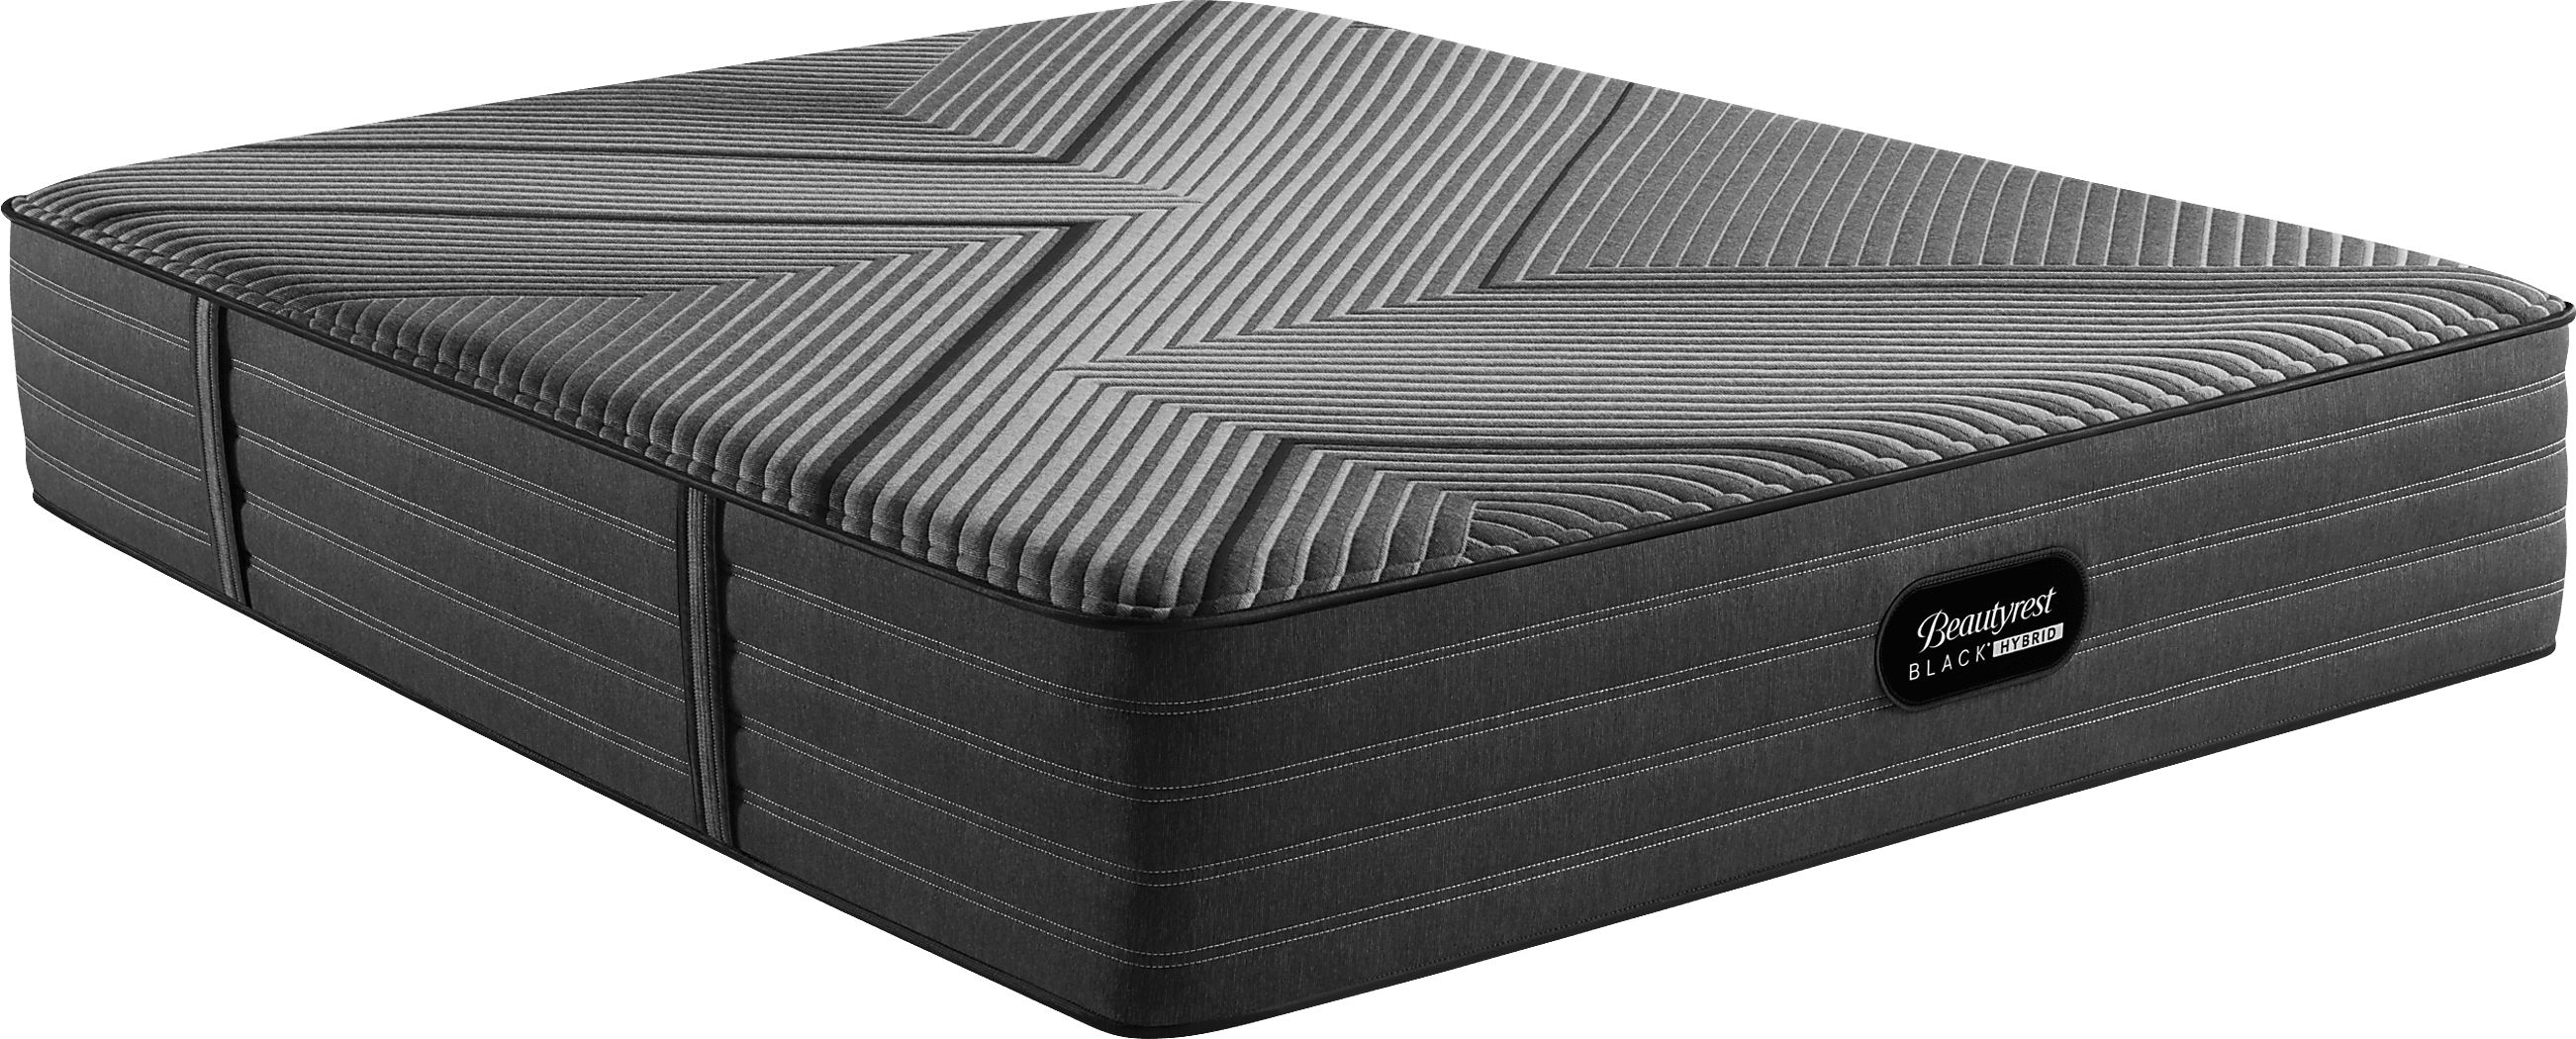 cantrill queen plush tight top mattress reviews